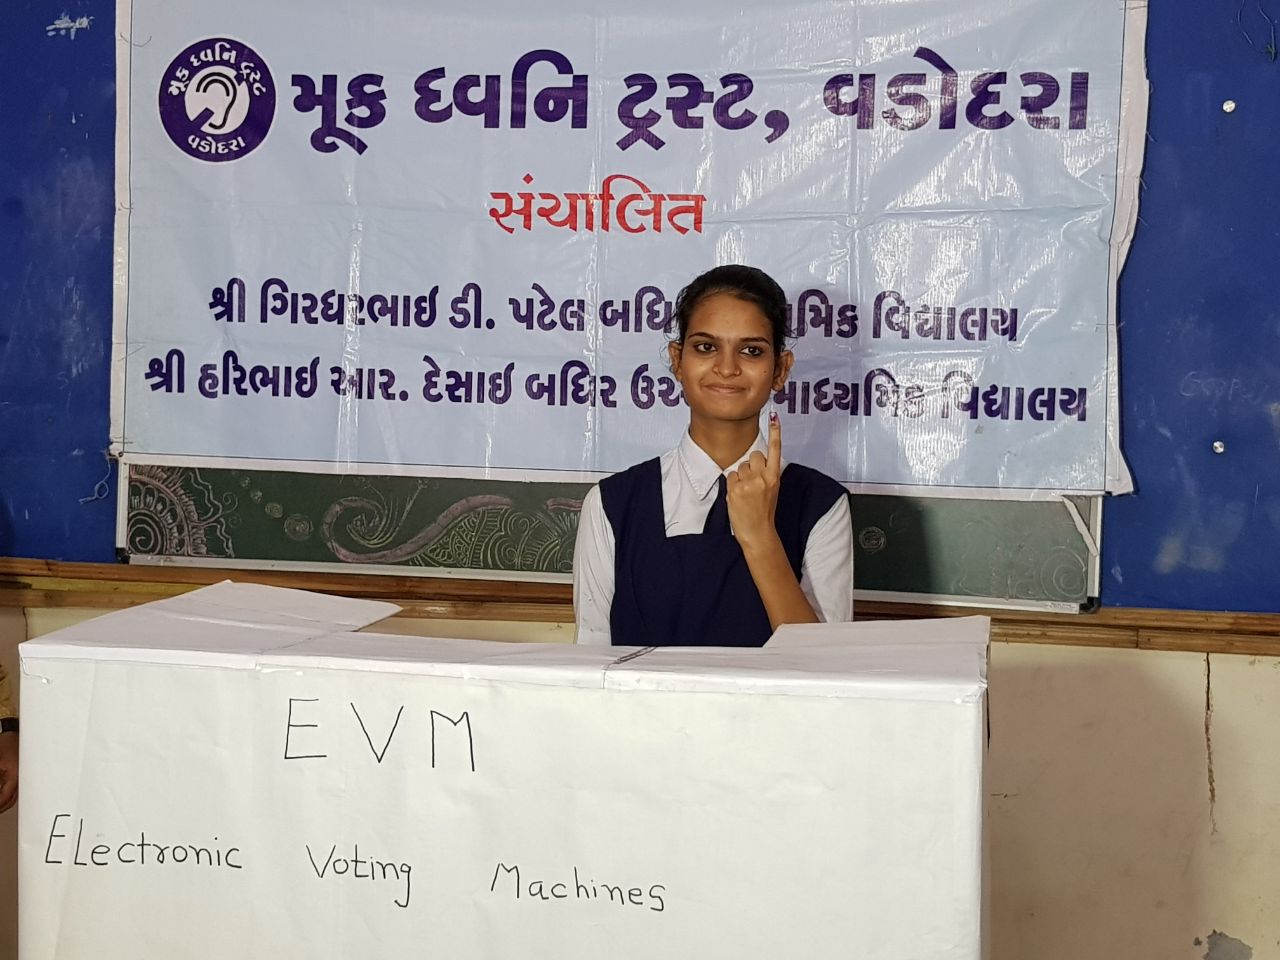 E voting at Mook Dhwani school in Vadodara